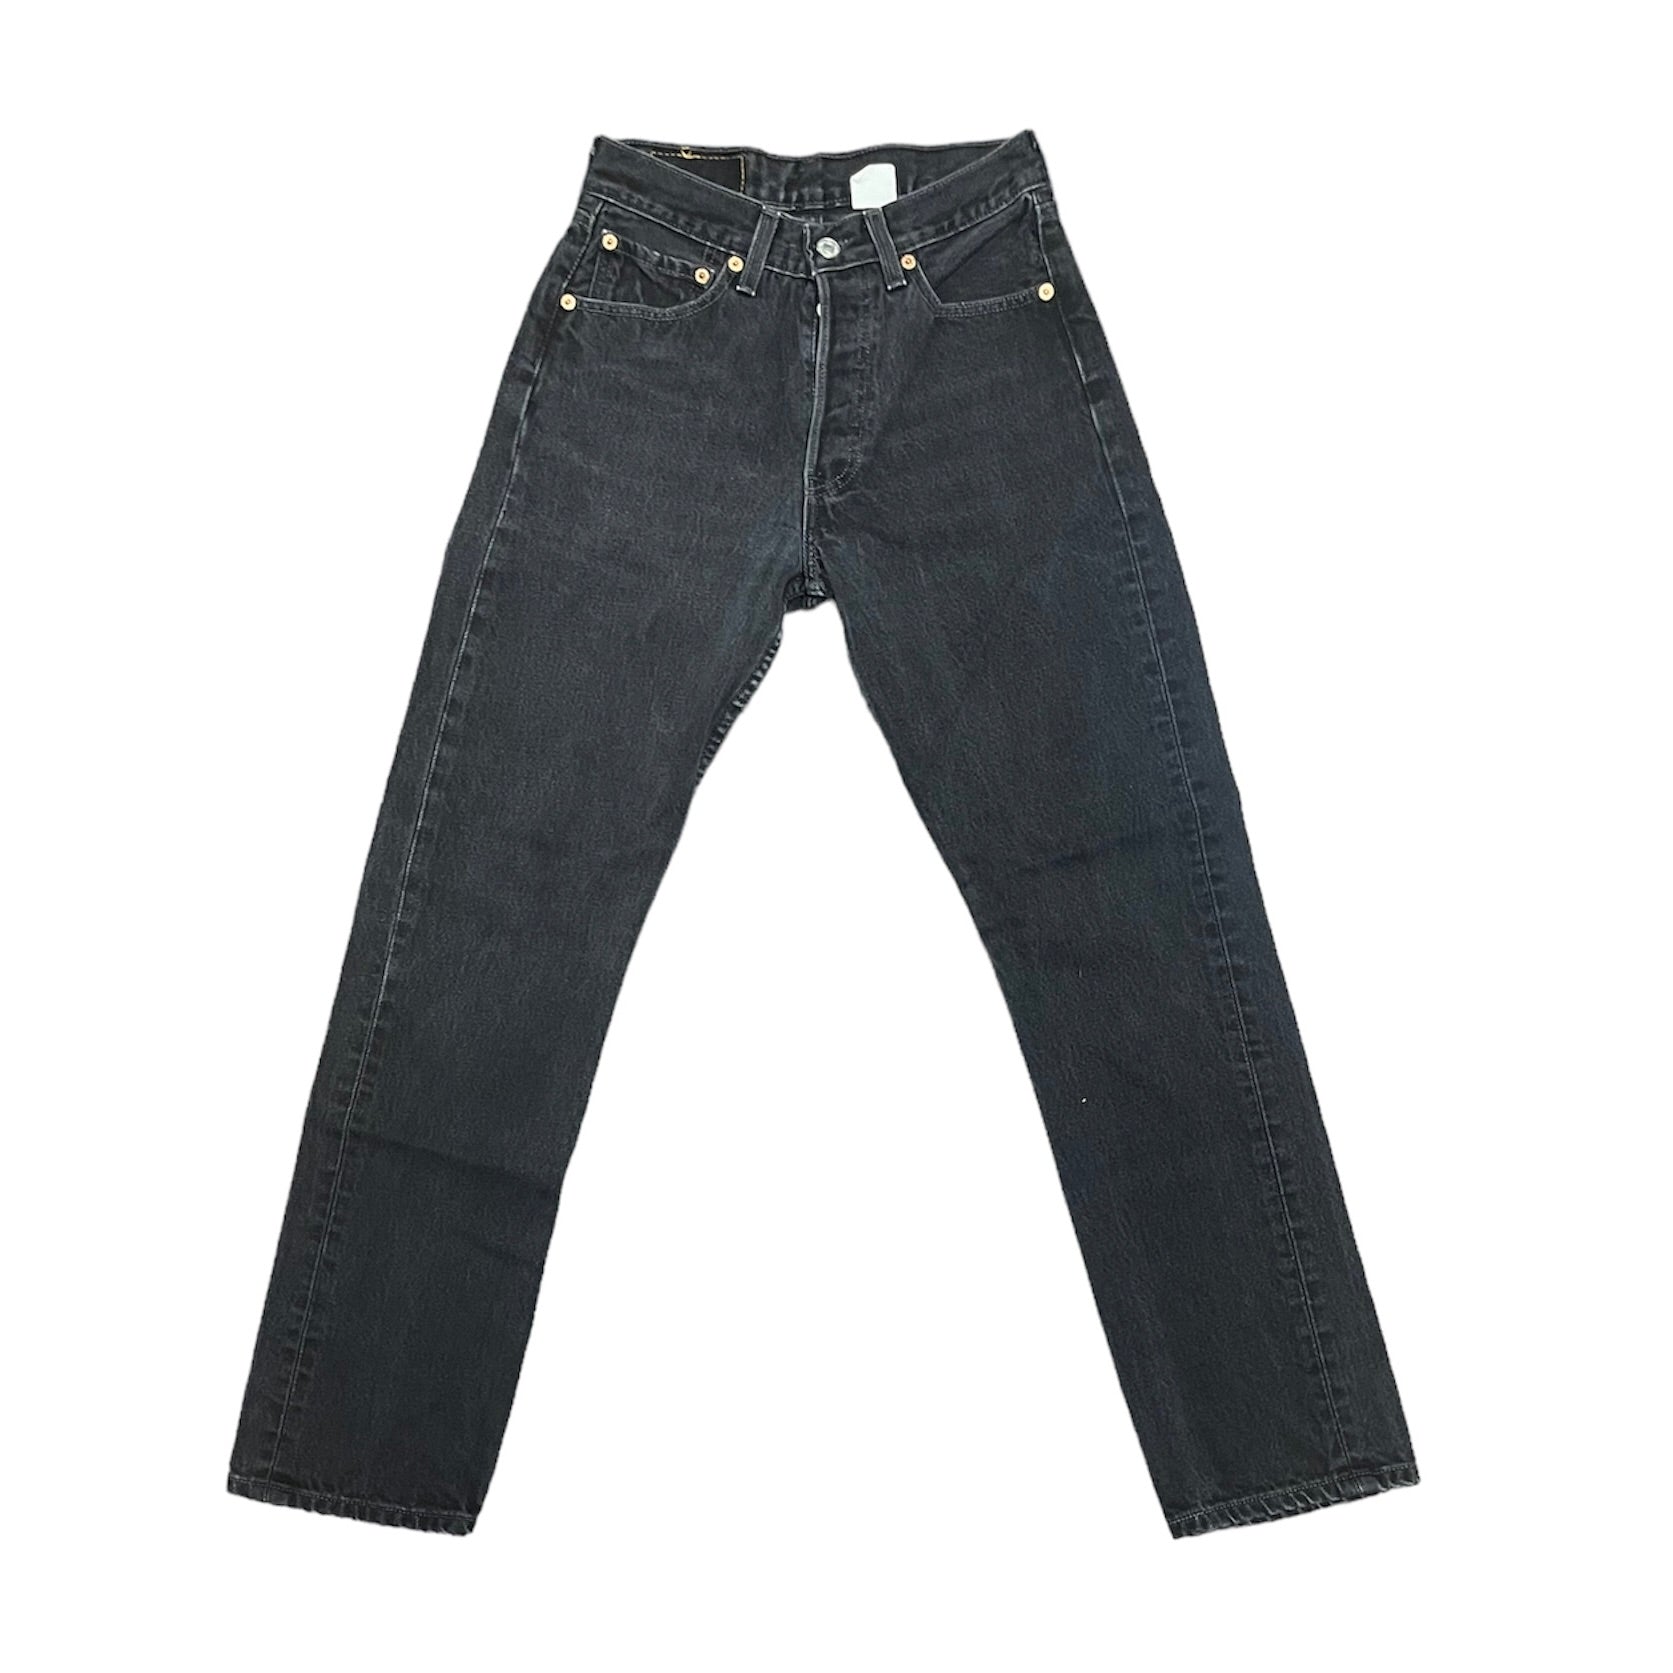 Vintage Levis 501 Vintage Black Jeans